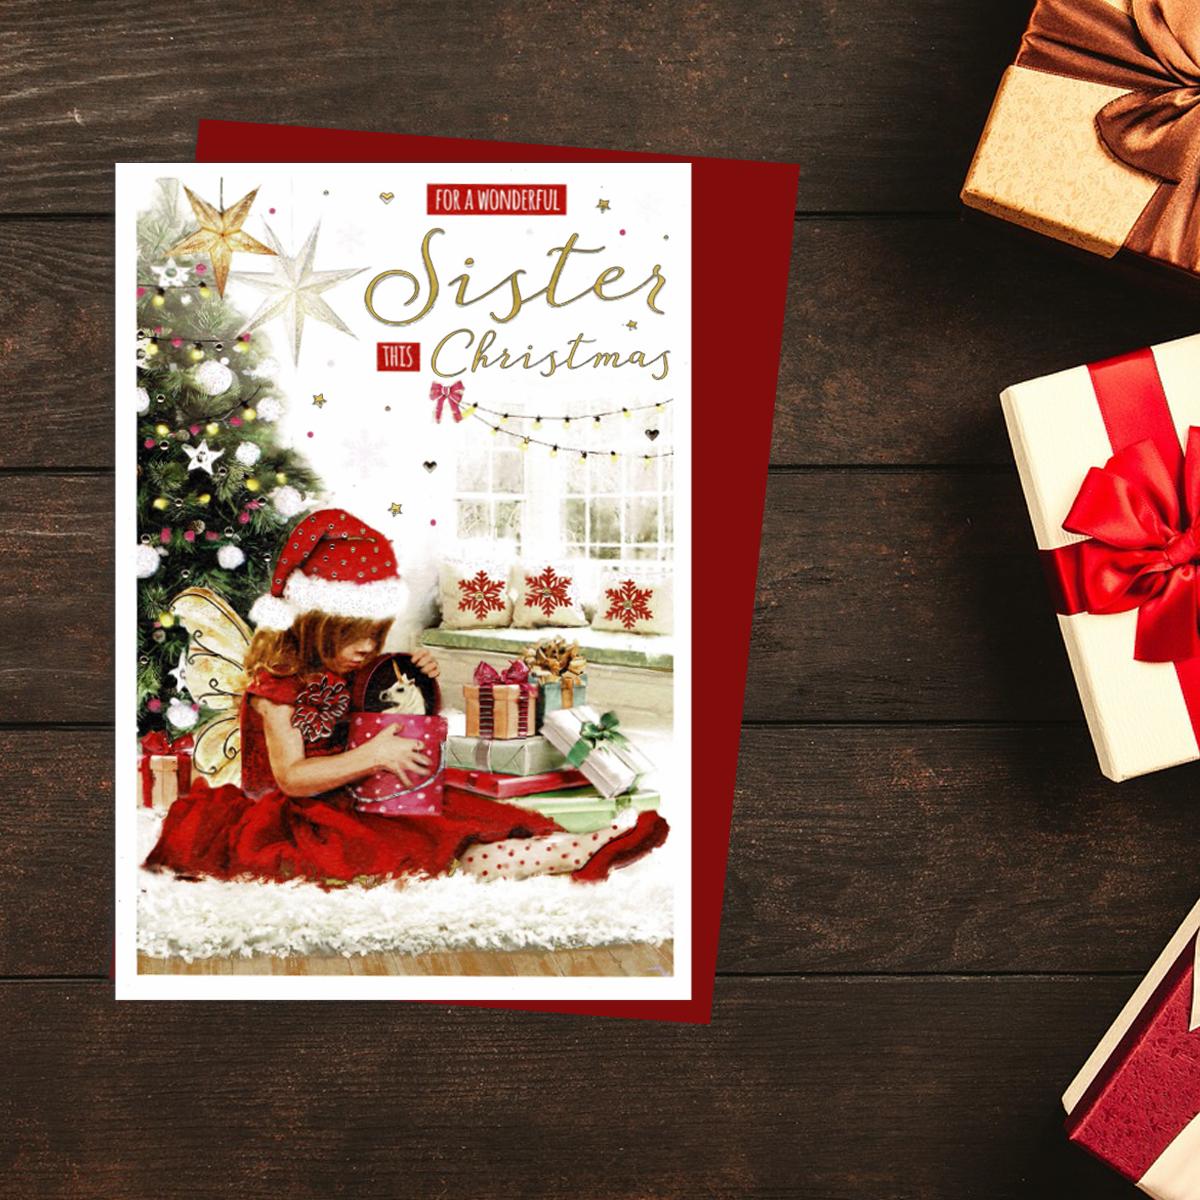 Sister Christmas Card Alongside Its Red Envelope